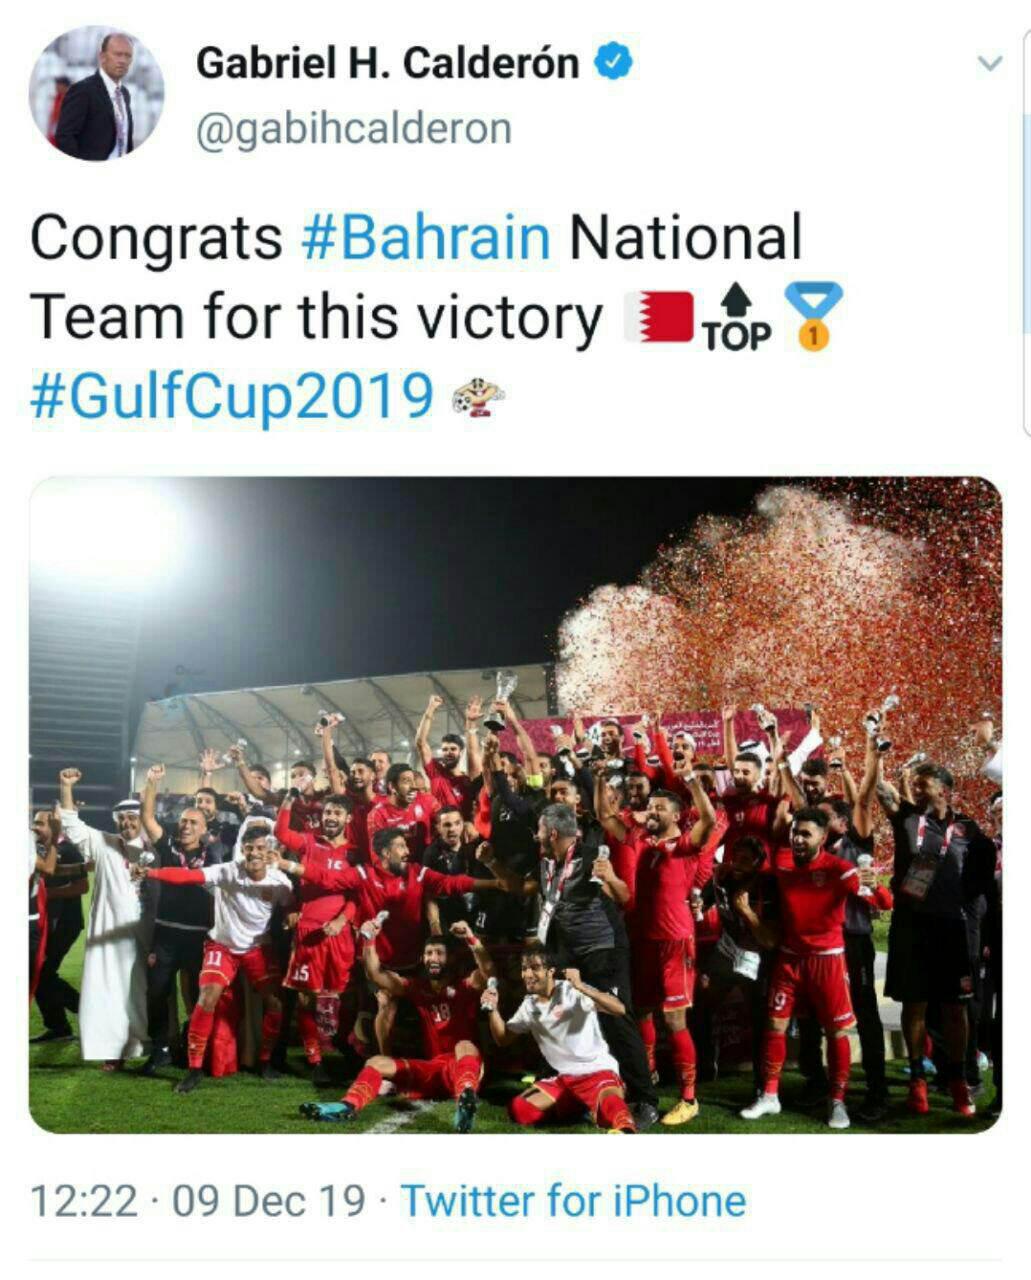 توئیت عجیب کالدرون و تبریک به تیم ملی بحرین (+عکس)